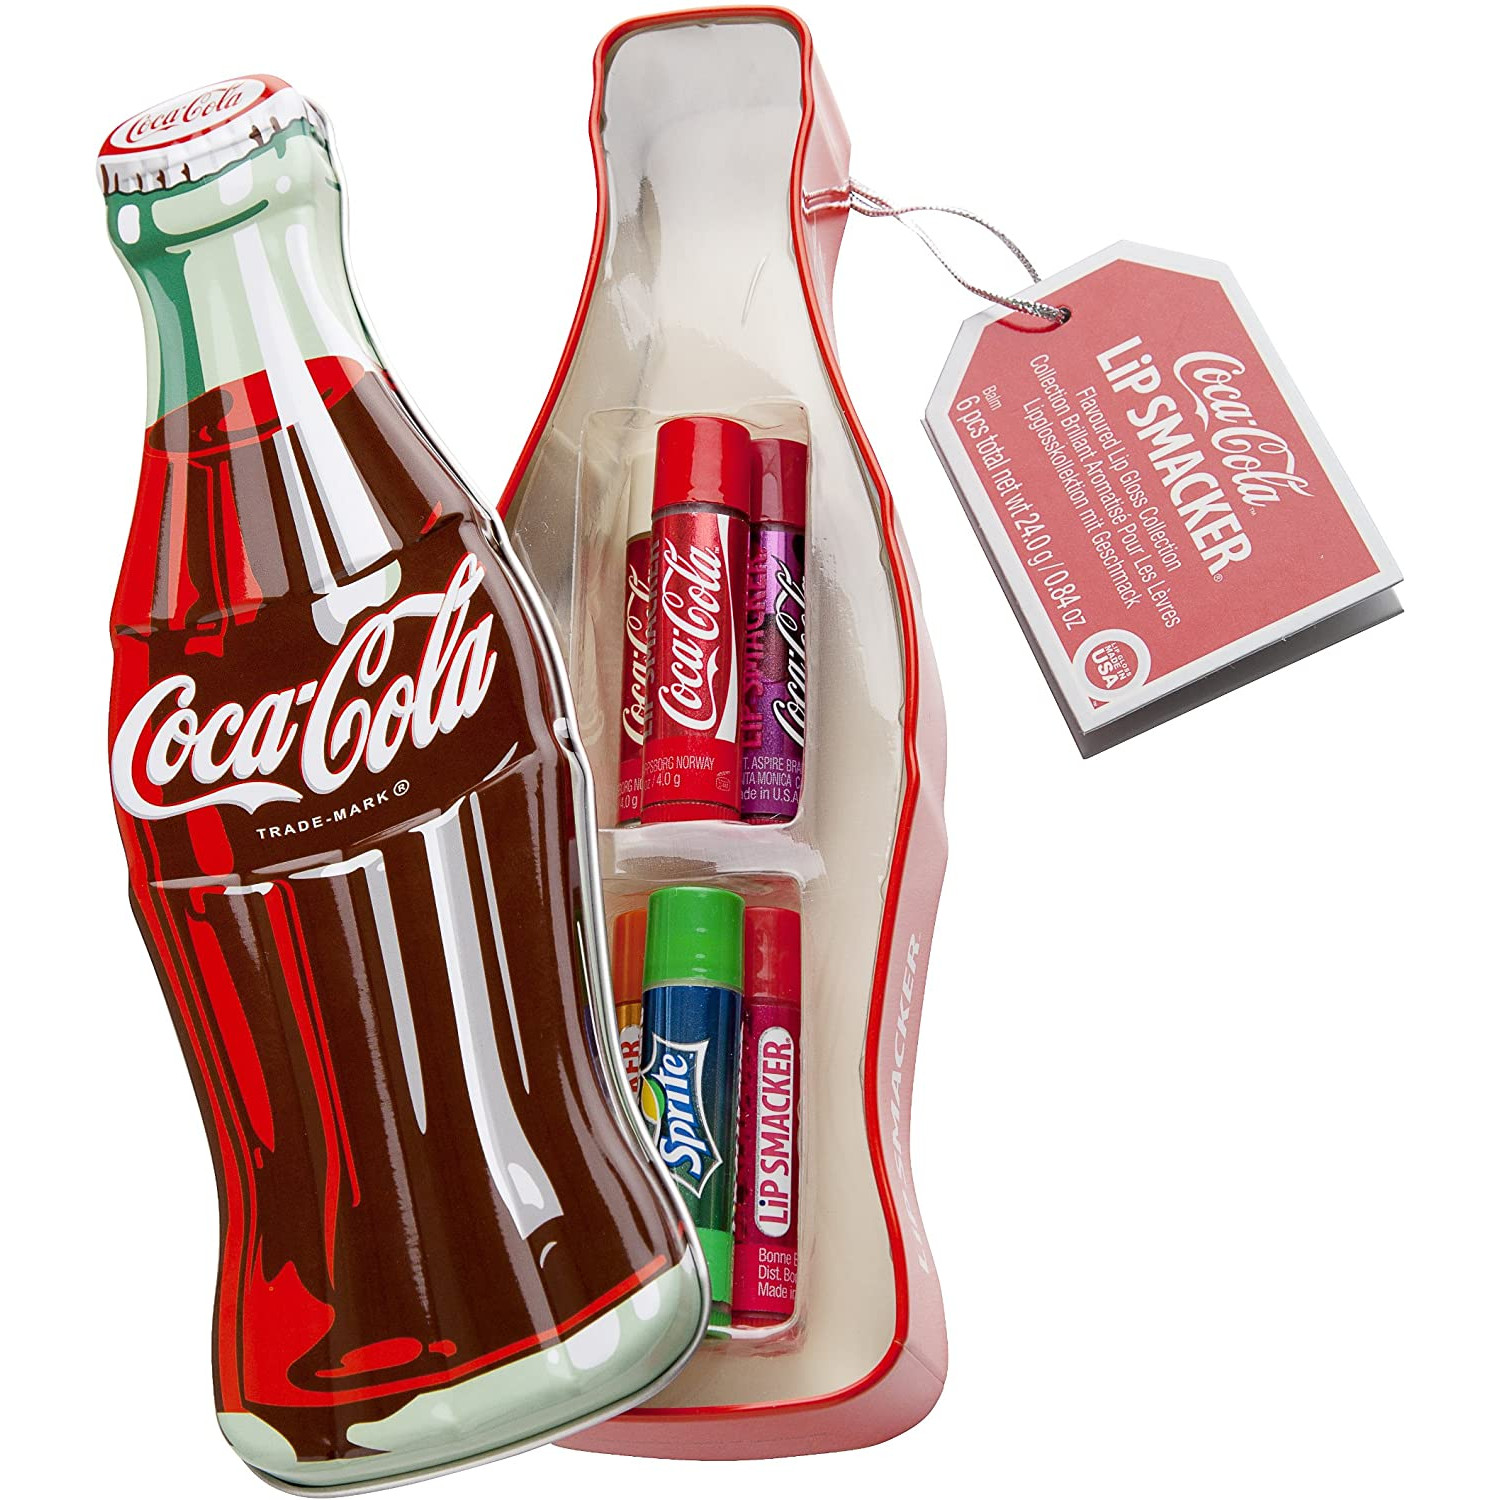 Lip Smacker - Set 6 Cây Son Coca Coca Vỉ Nhôm Vị Truyền Thống - LipSmaker Coca Cola Vintage Bottle Tint